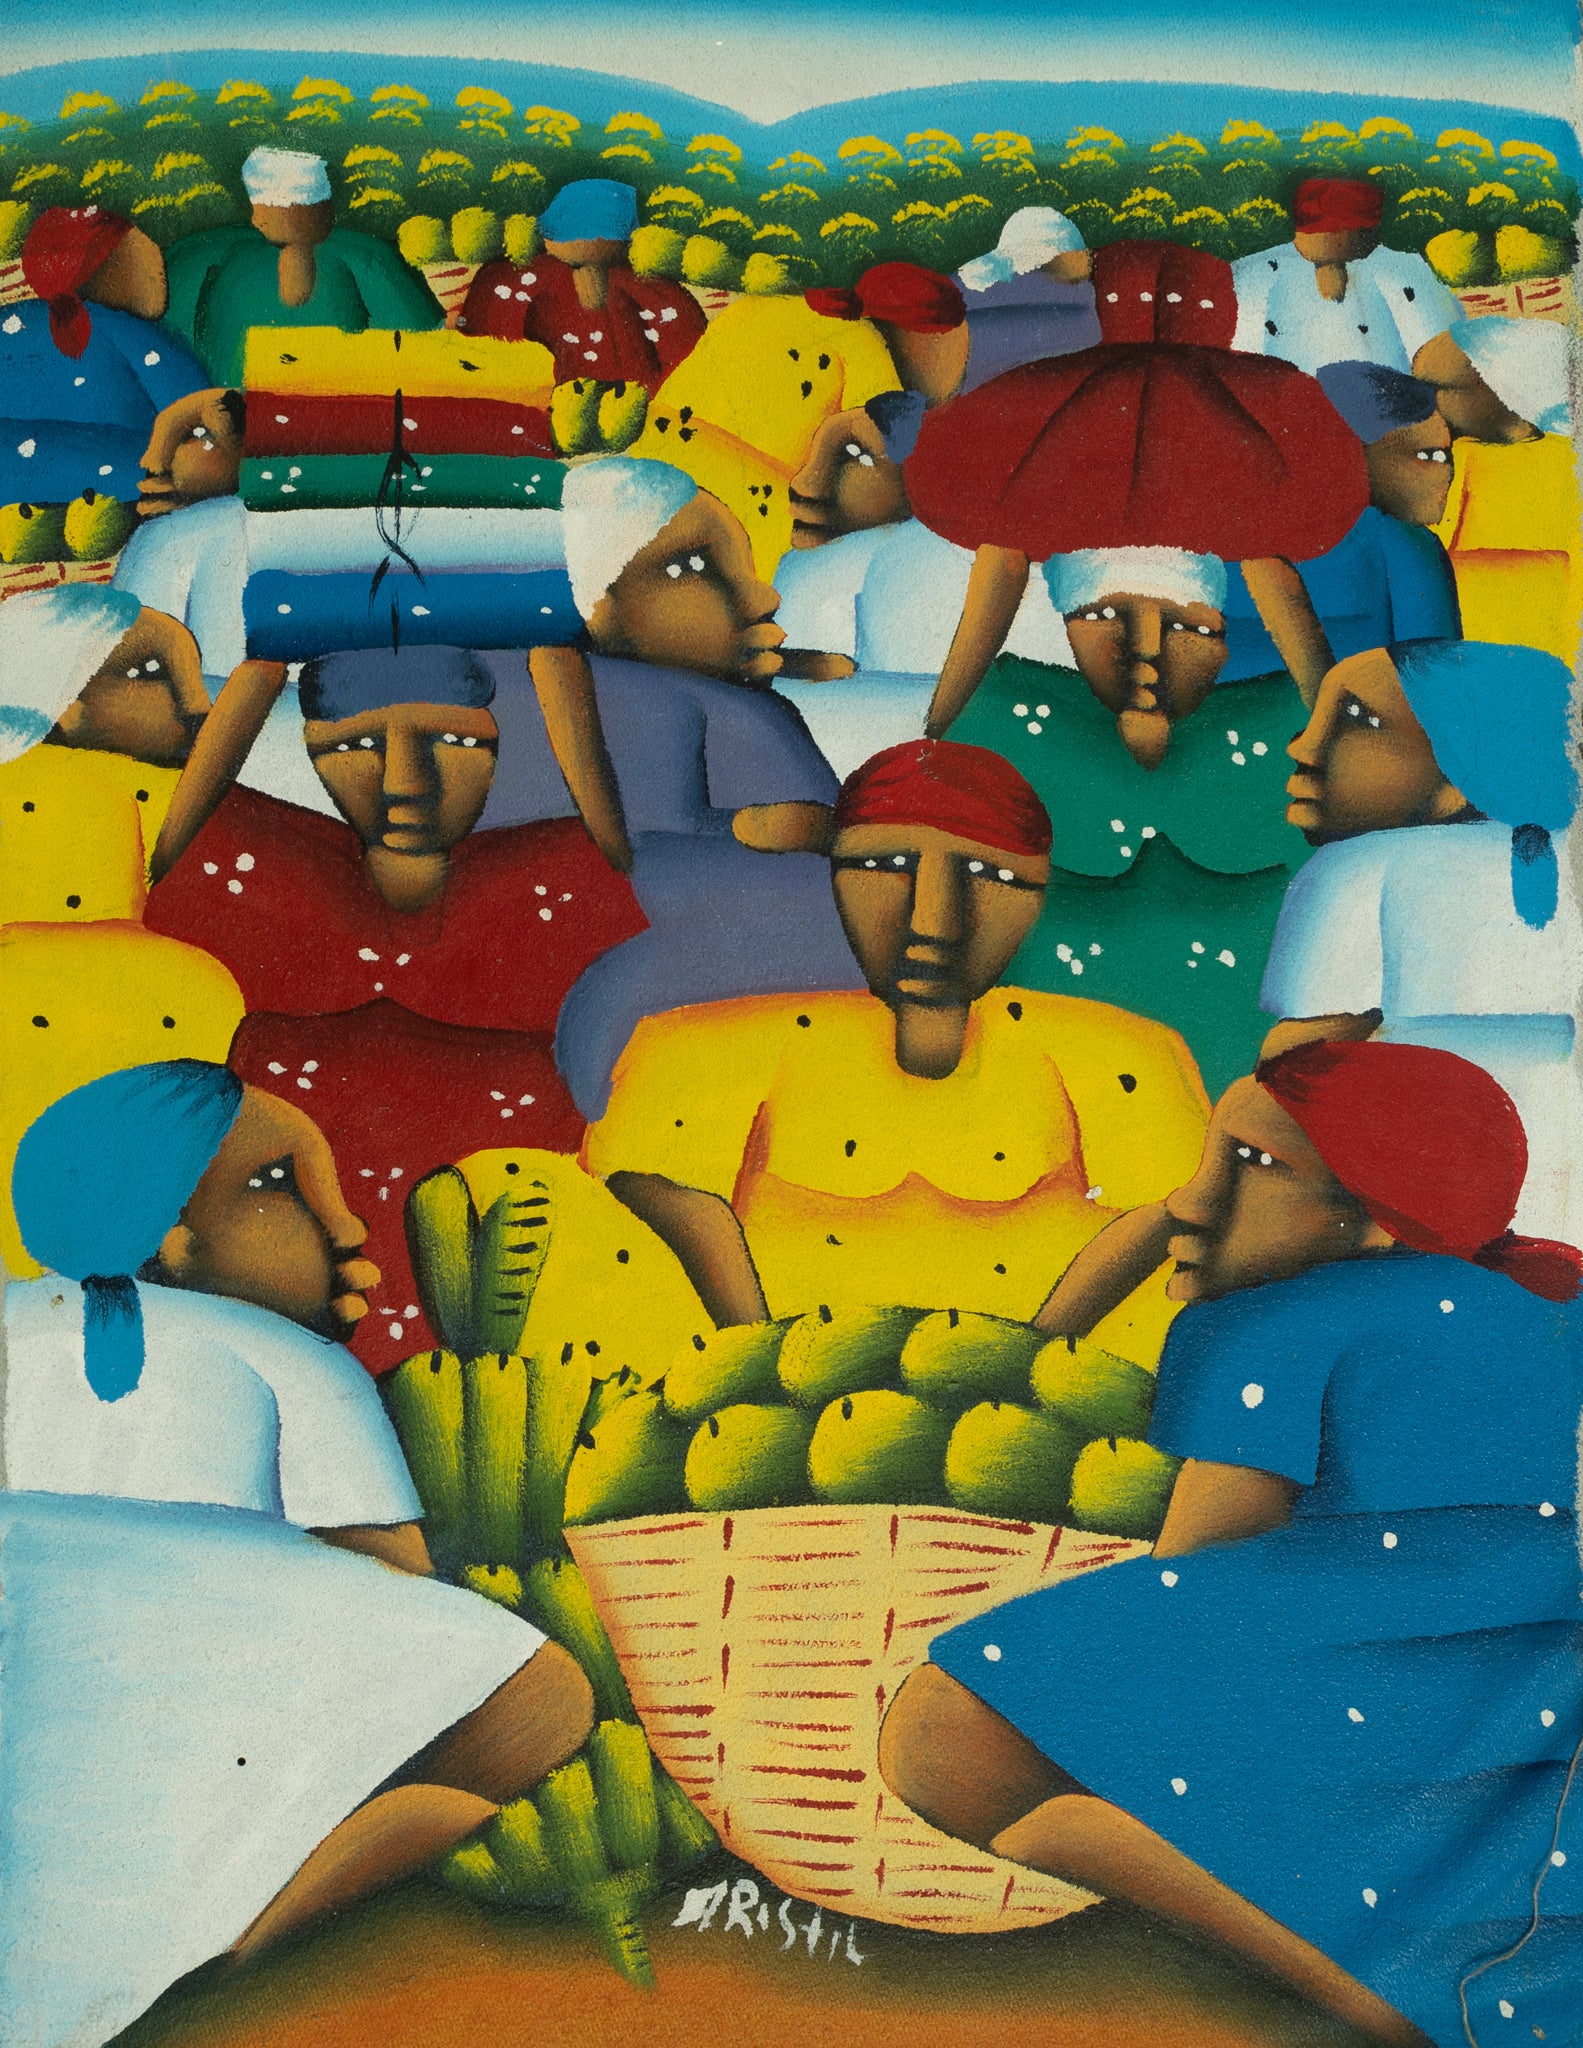 Haitian Painting Gathering at Dusk"